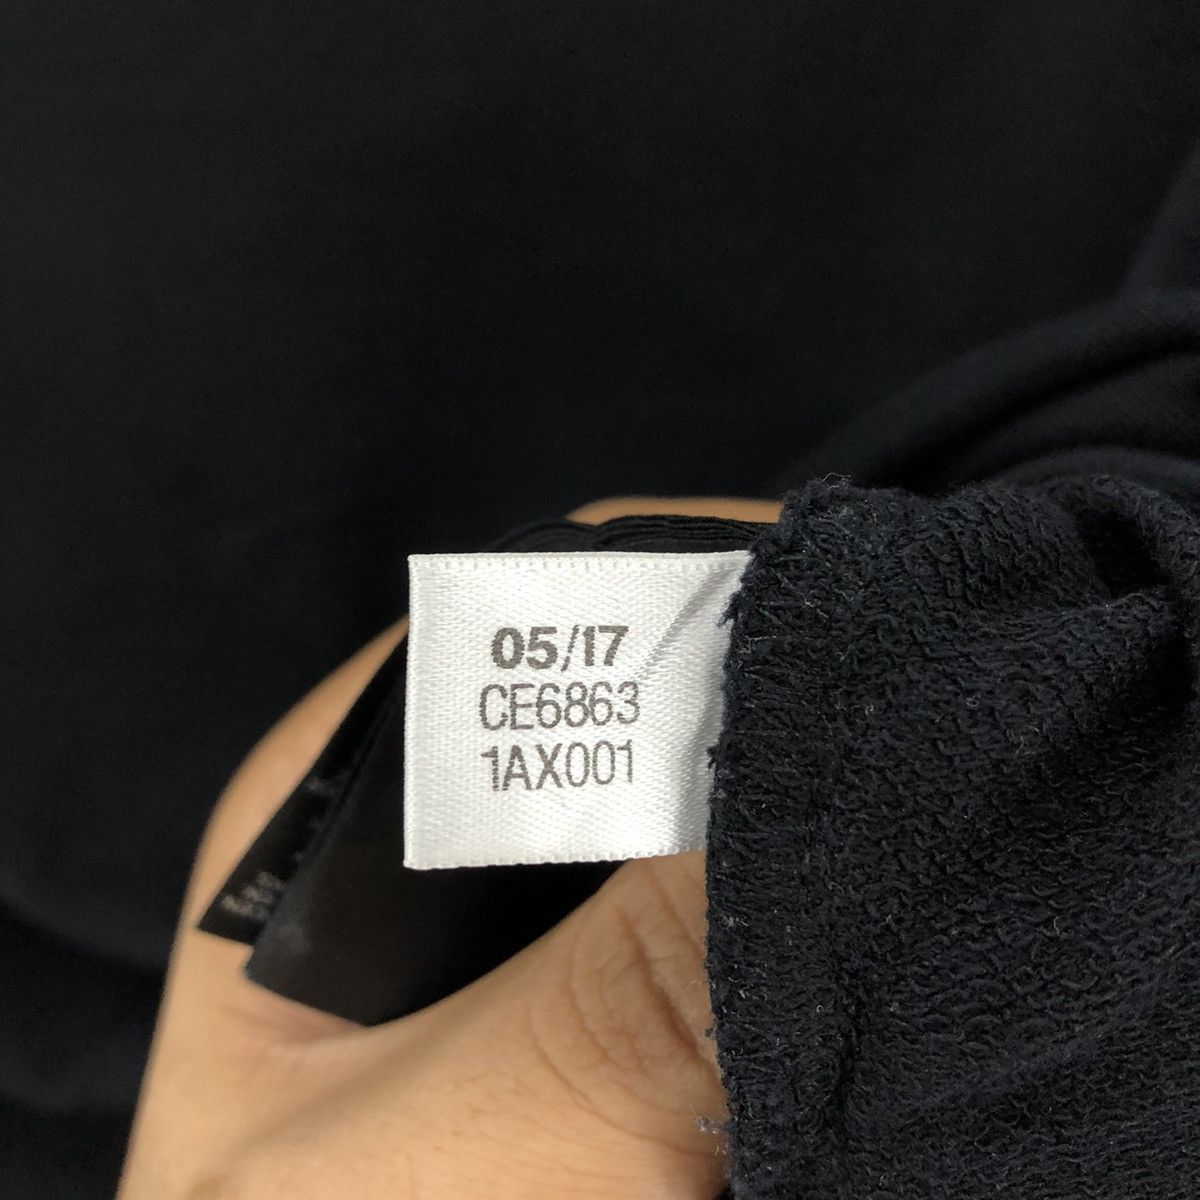 Adidas Yohji Yamamoto Y-3 Pullover Size US M / EU 48-50 / 2 - 7 Thumbnail